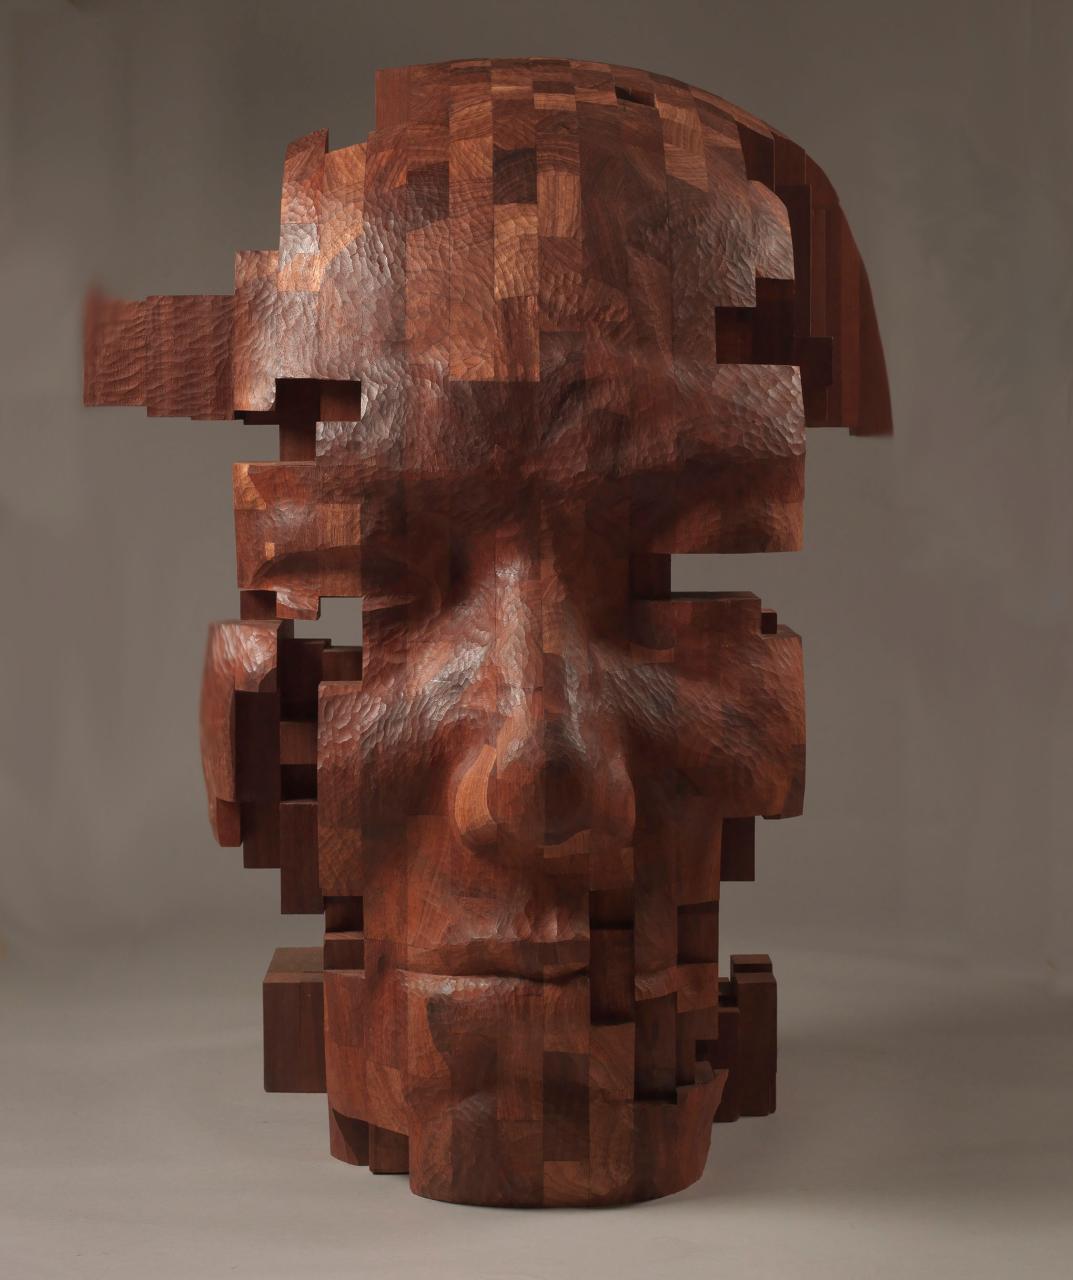 Splendid Wood Sculptures Of Pixelated Figures By Hsu Tung Han 8